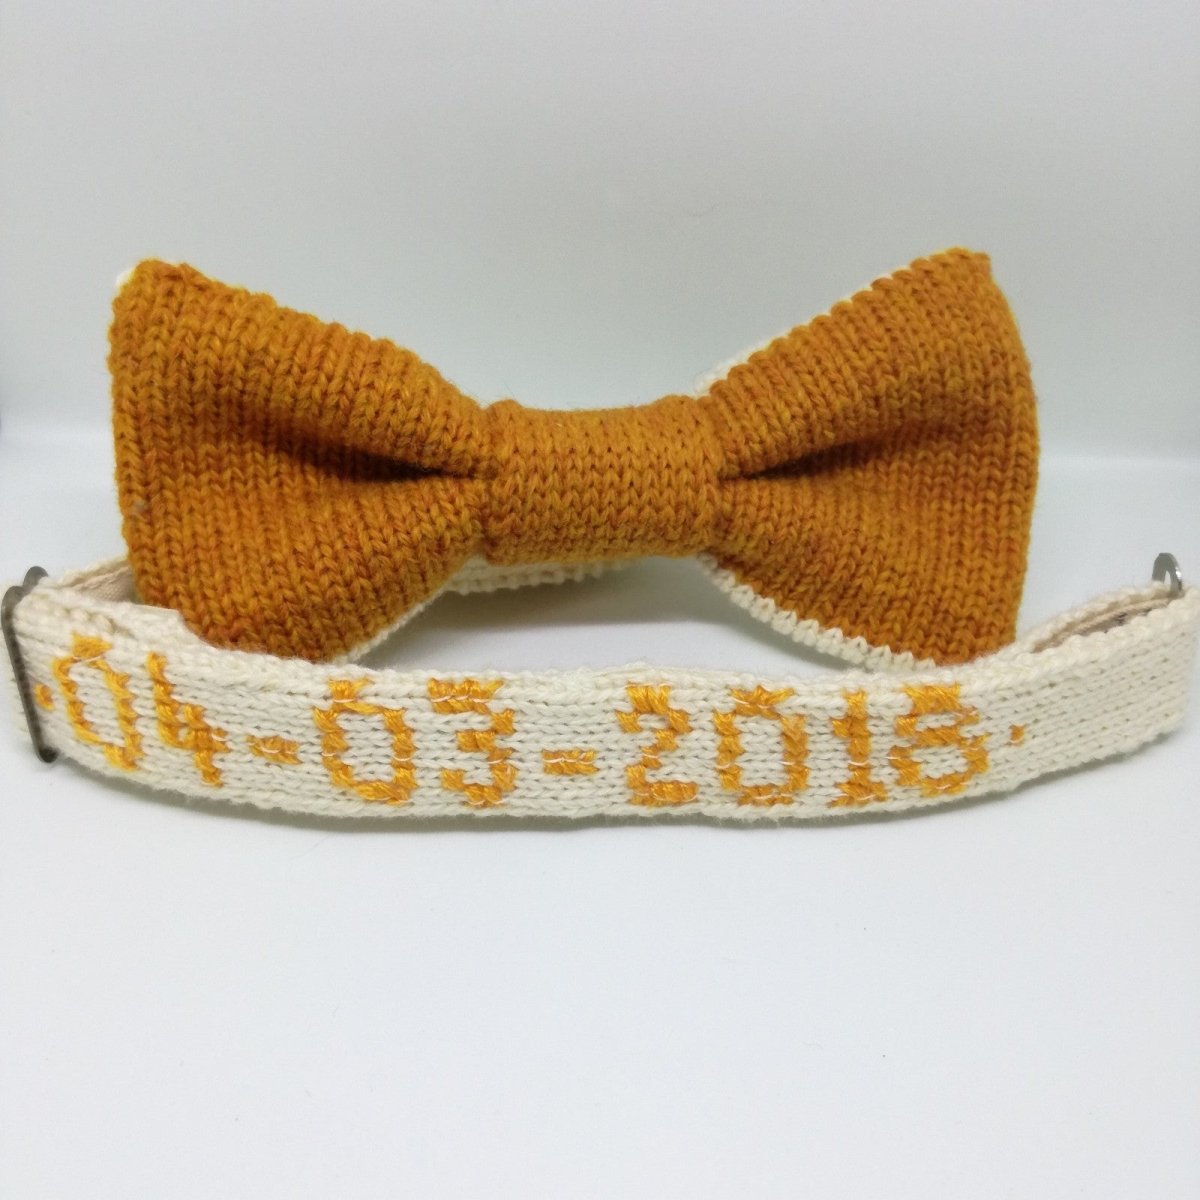 Custom Made Bow Tie - Wool & Water